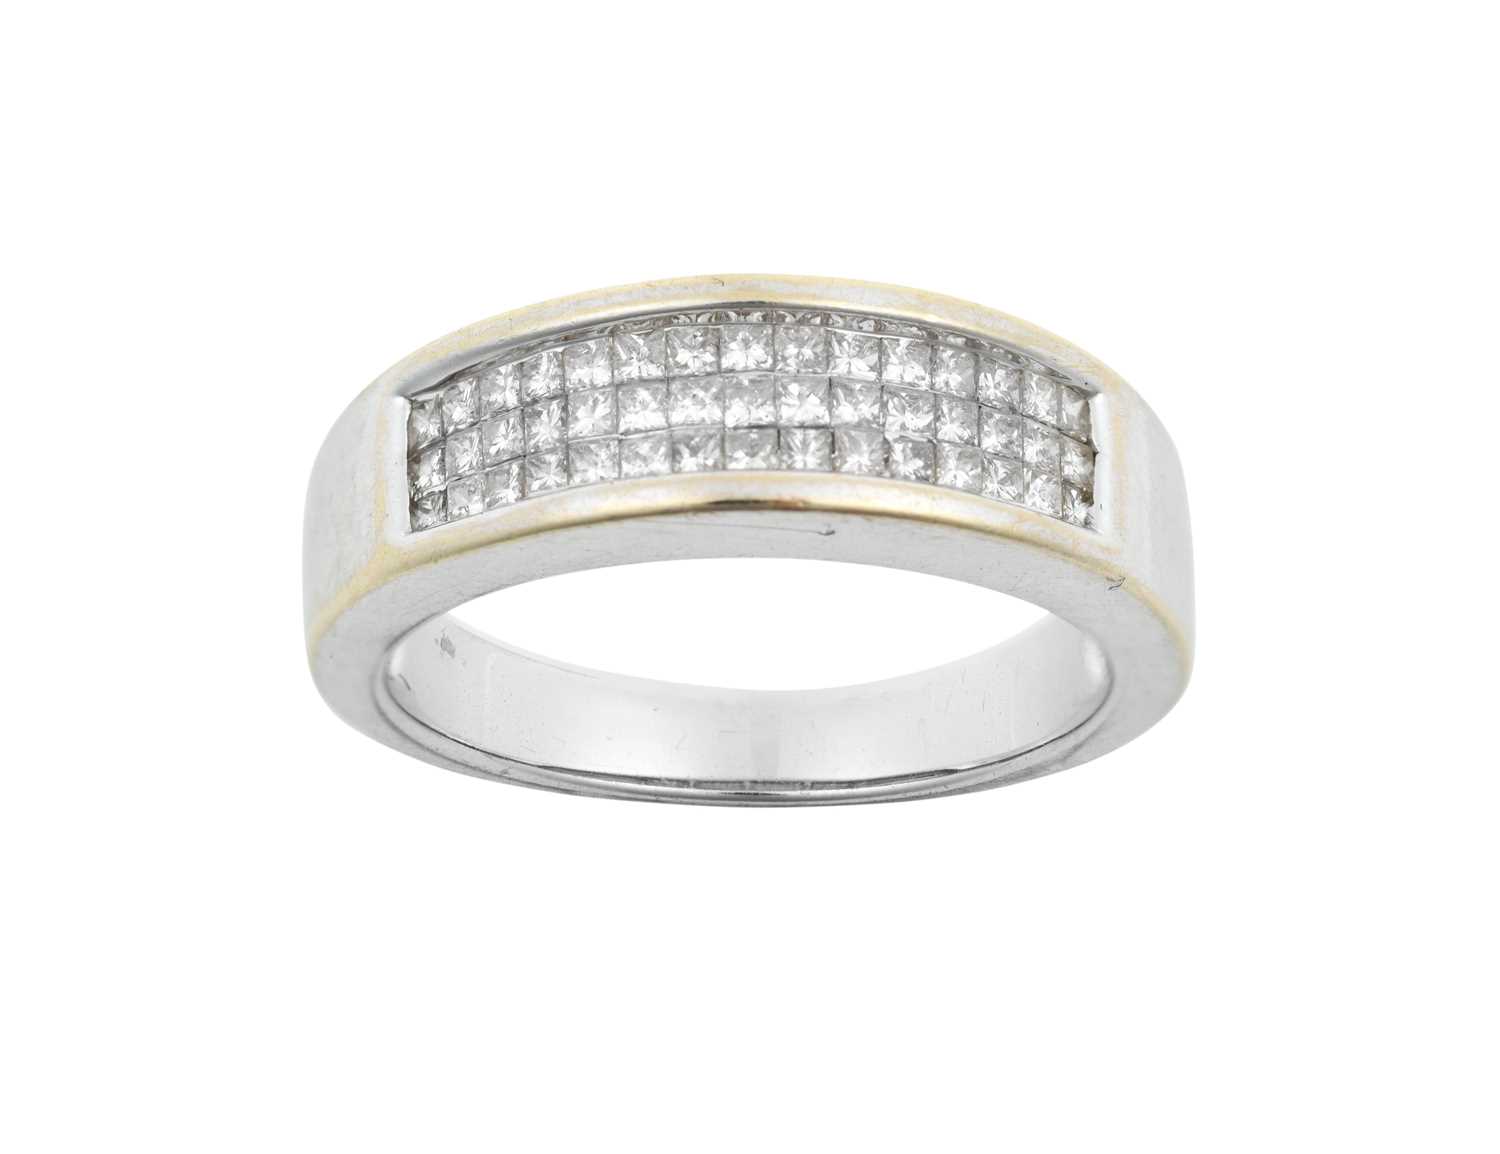 An 18 Carat White Gold Diamond Half Hoop Ring, by Iliana three rows of princess cut diamonds in a